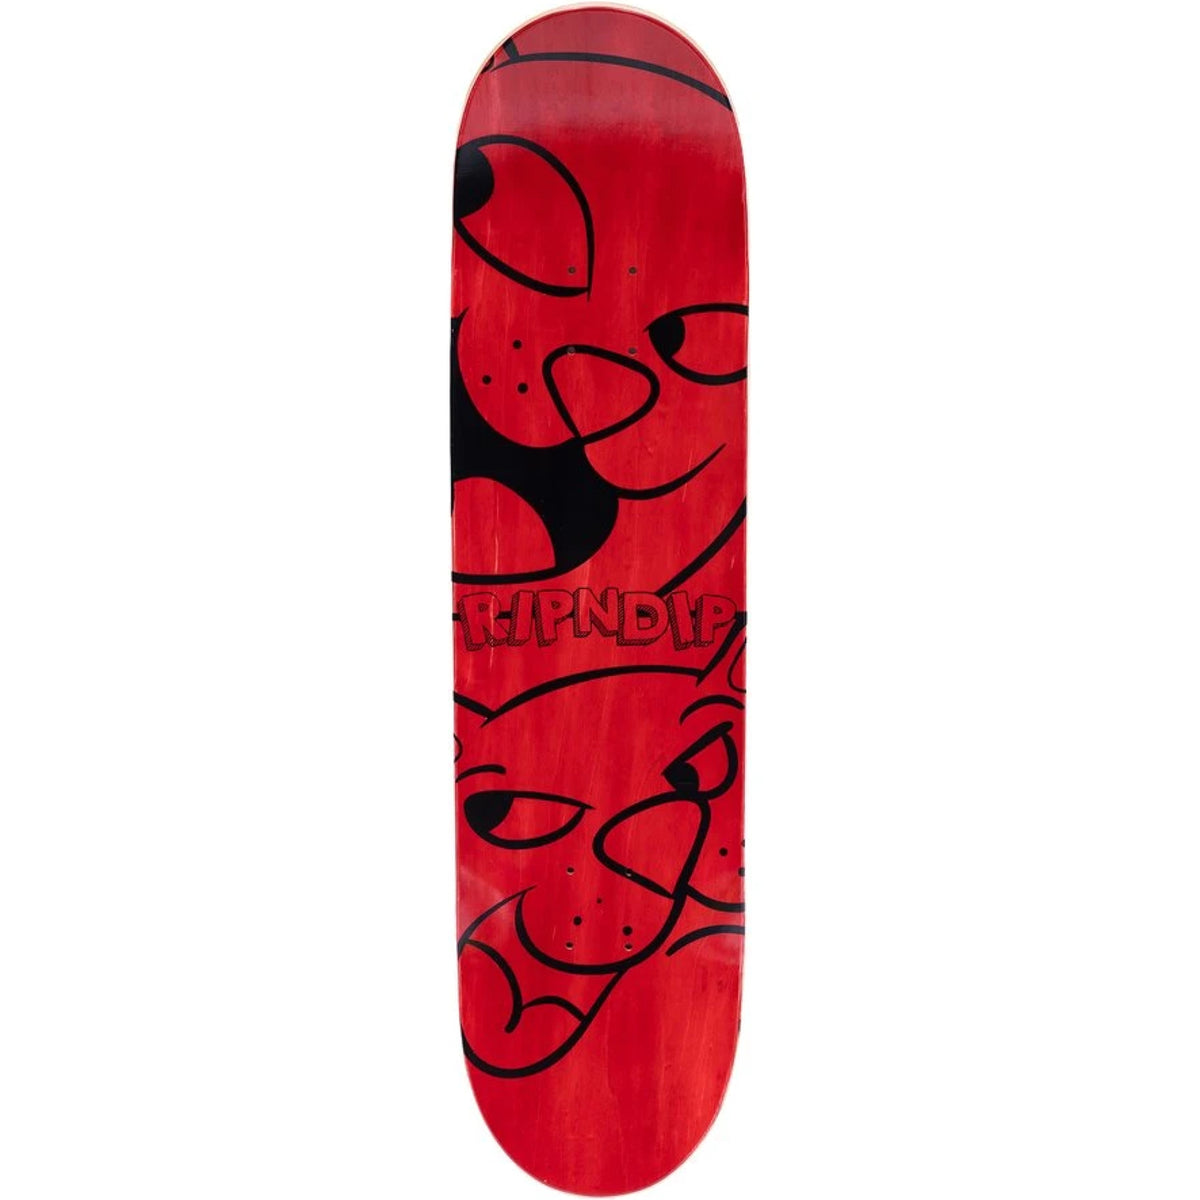 Ripndip Pop Nerm Skateboard Deck Multi 8.25"